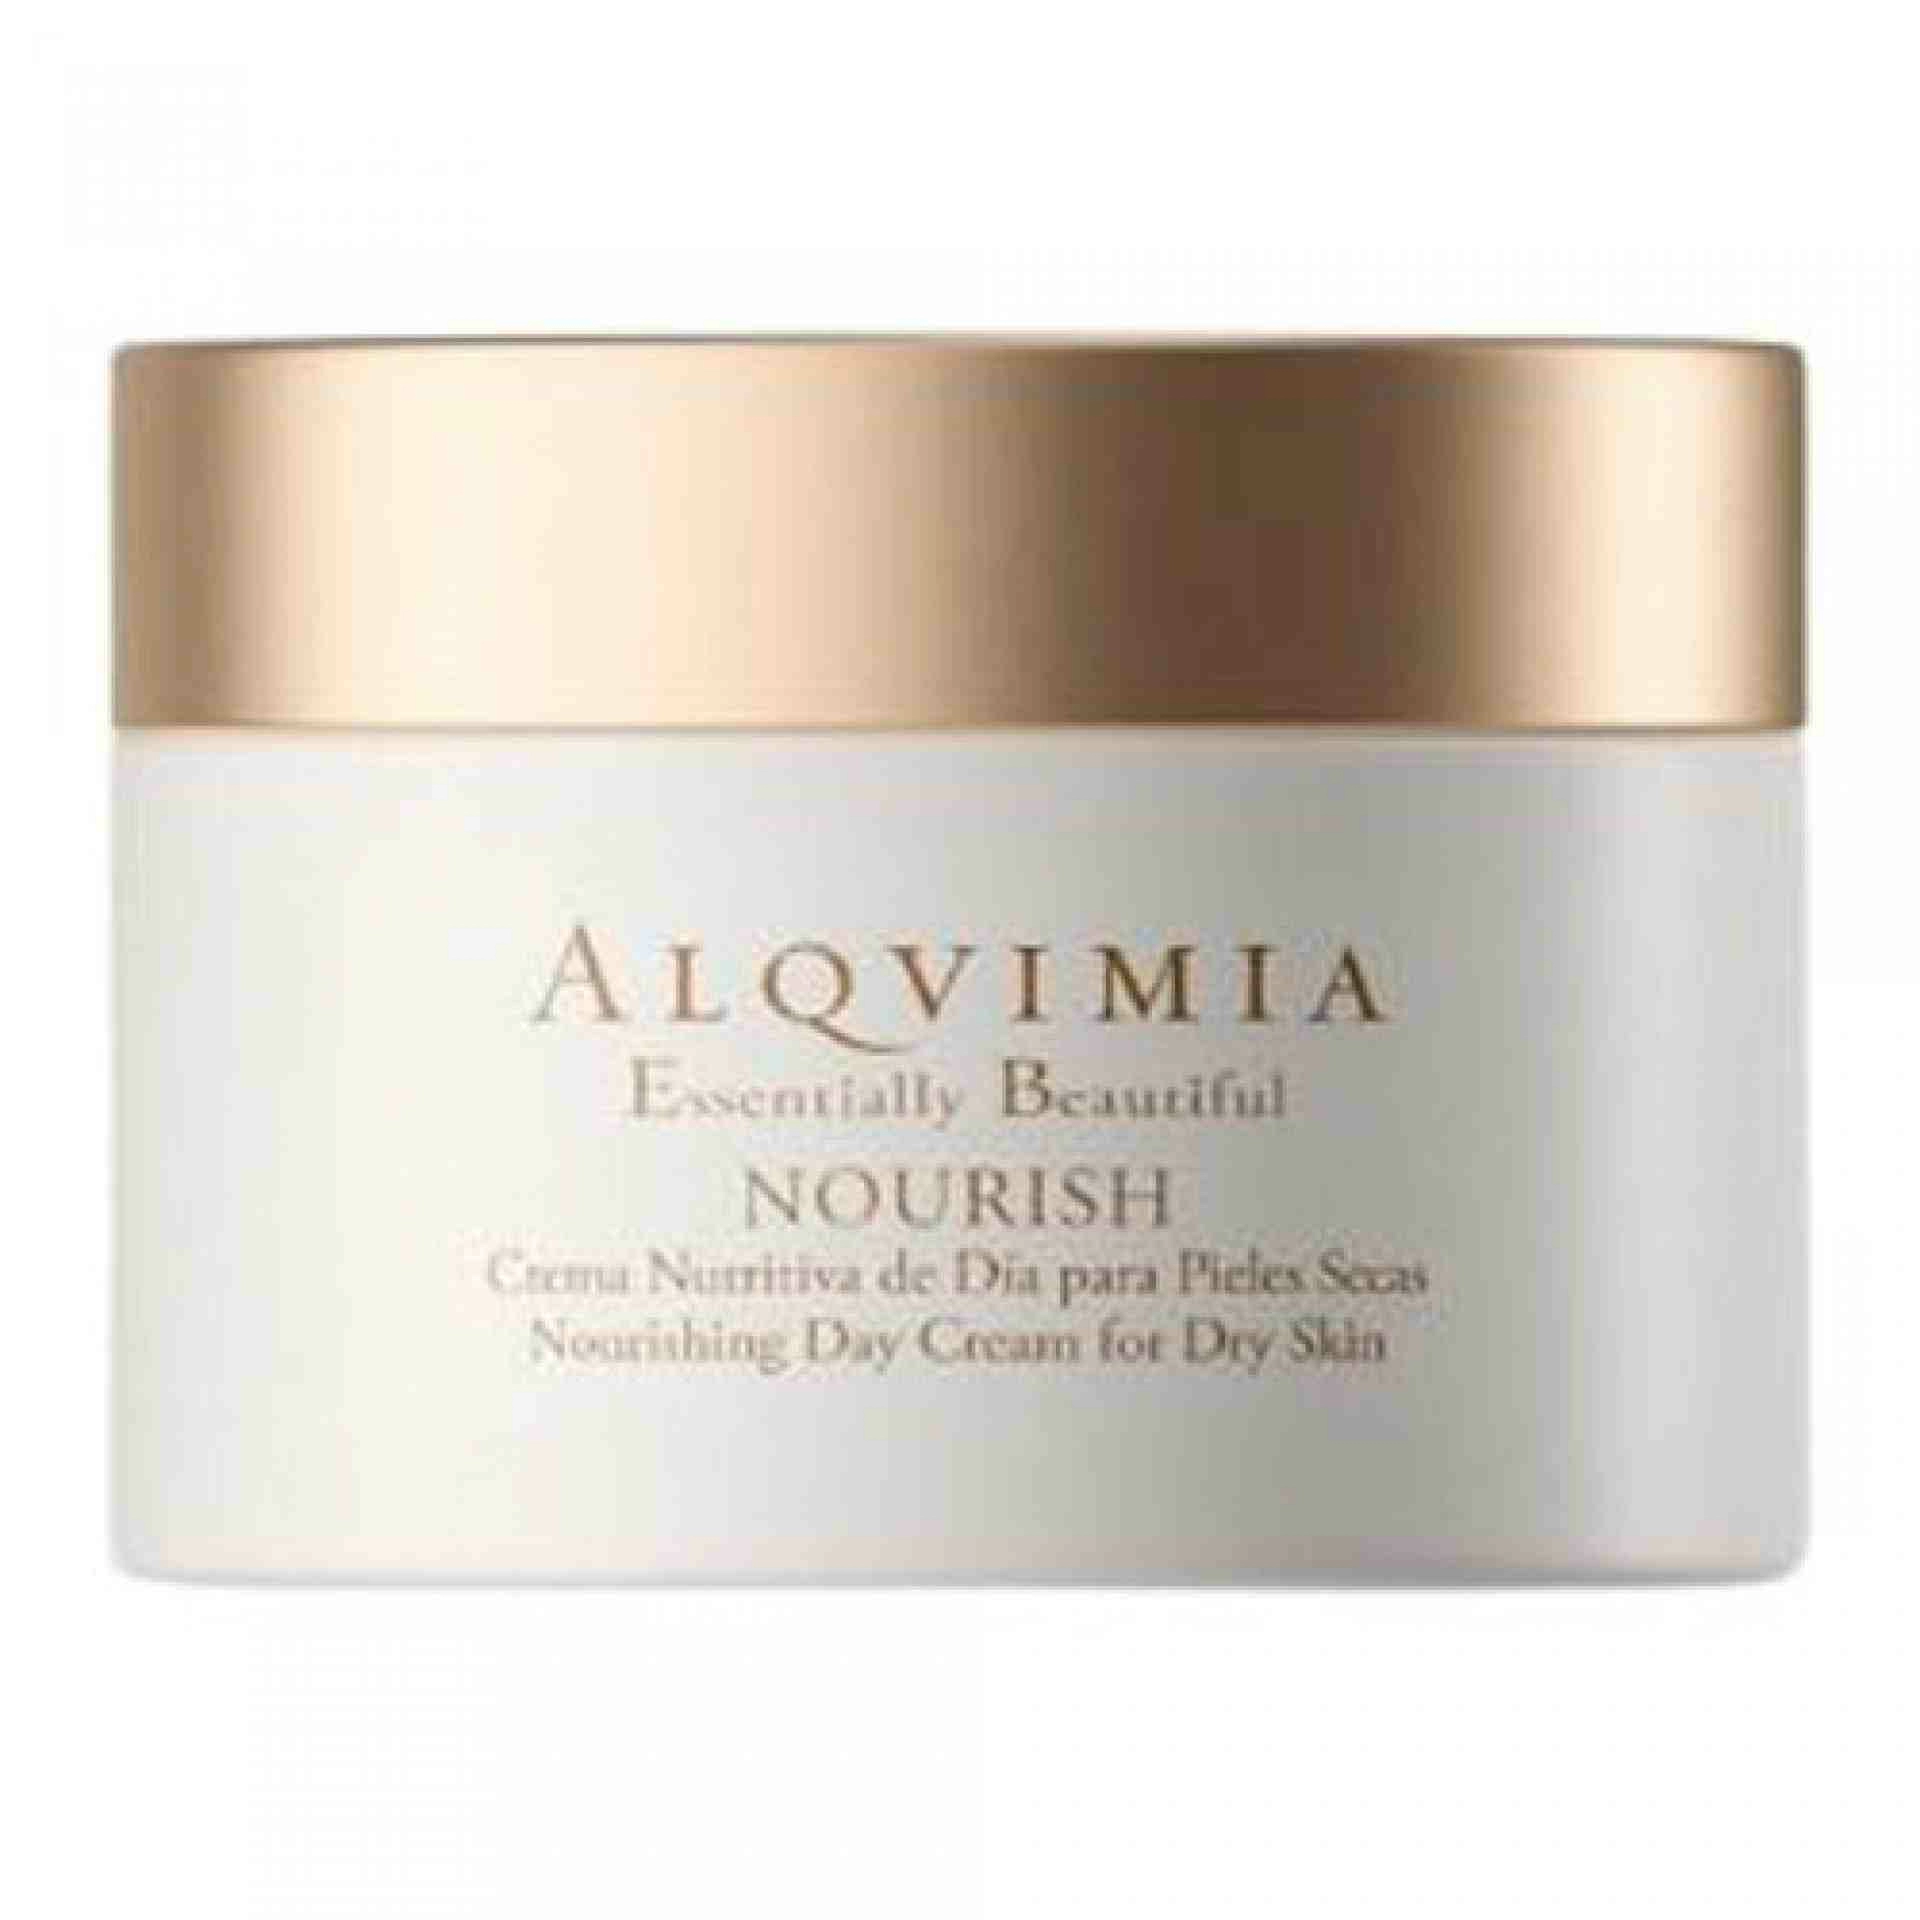 Nourish | Crema hidratante para pieles secas 50ml - Essentially Beautiful - Alqvimia ®